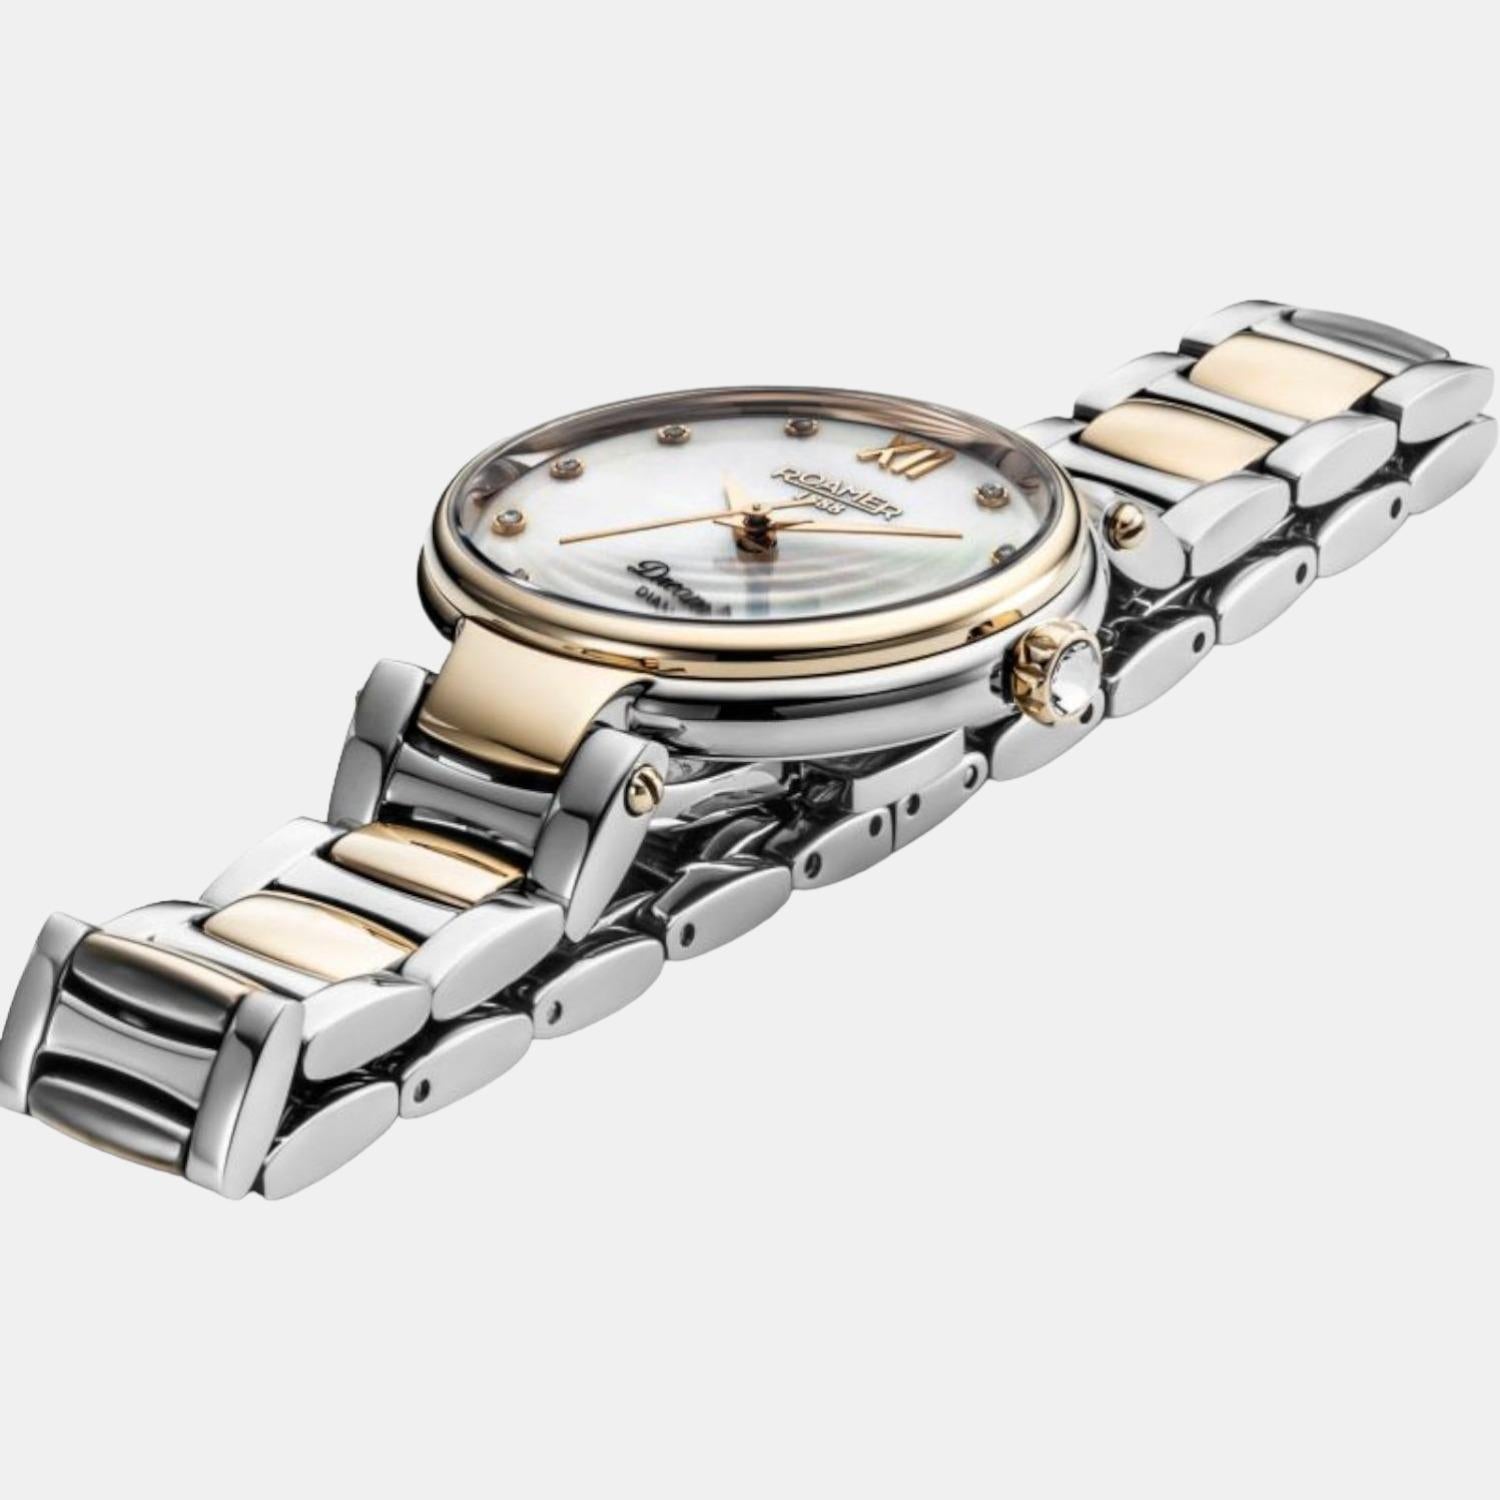 roamer-stainless-steel-white-analog-female-watch-857847-47-29-50